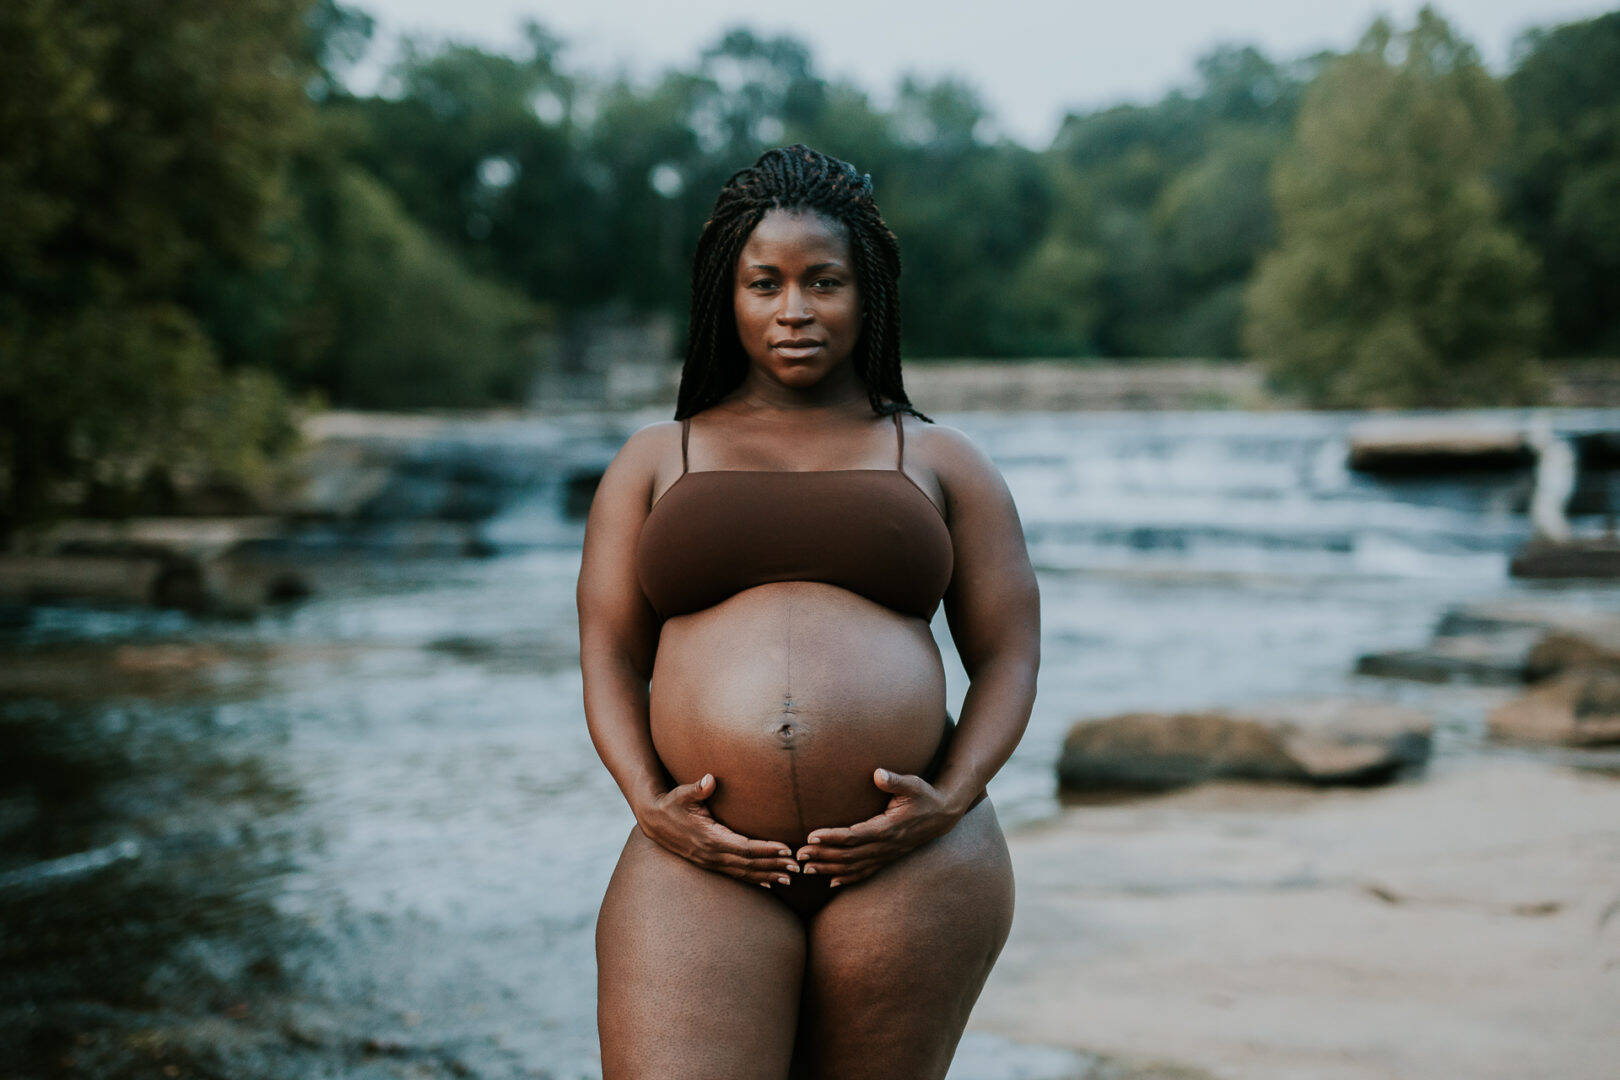 Maternidade | 1º lugar - Foto tirada na Carolina do Sul, nos Estados Unidos. Foto: Jen Conway/Jen Conway Photography